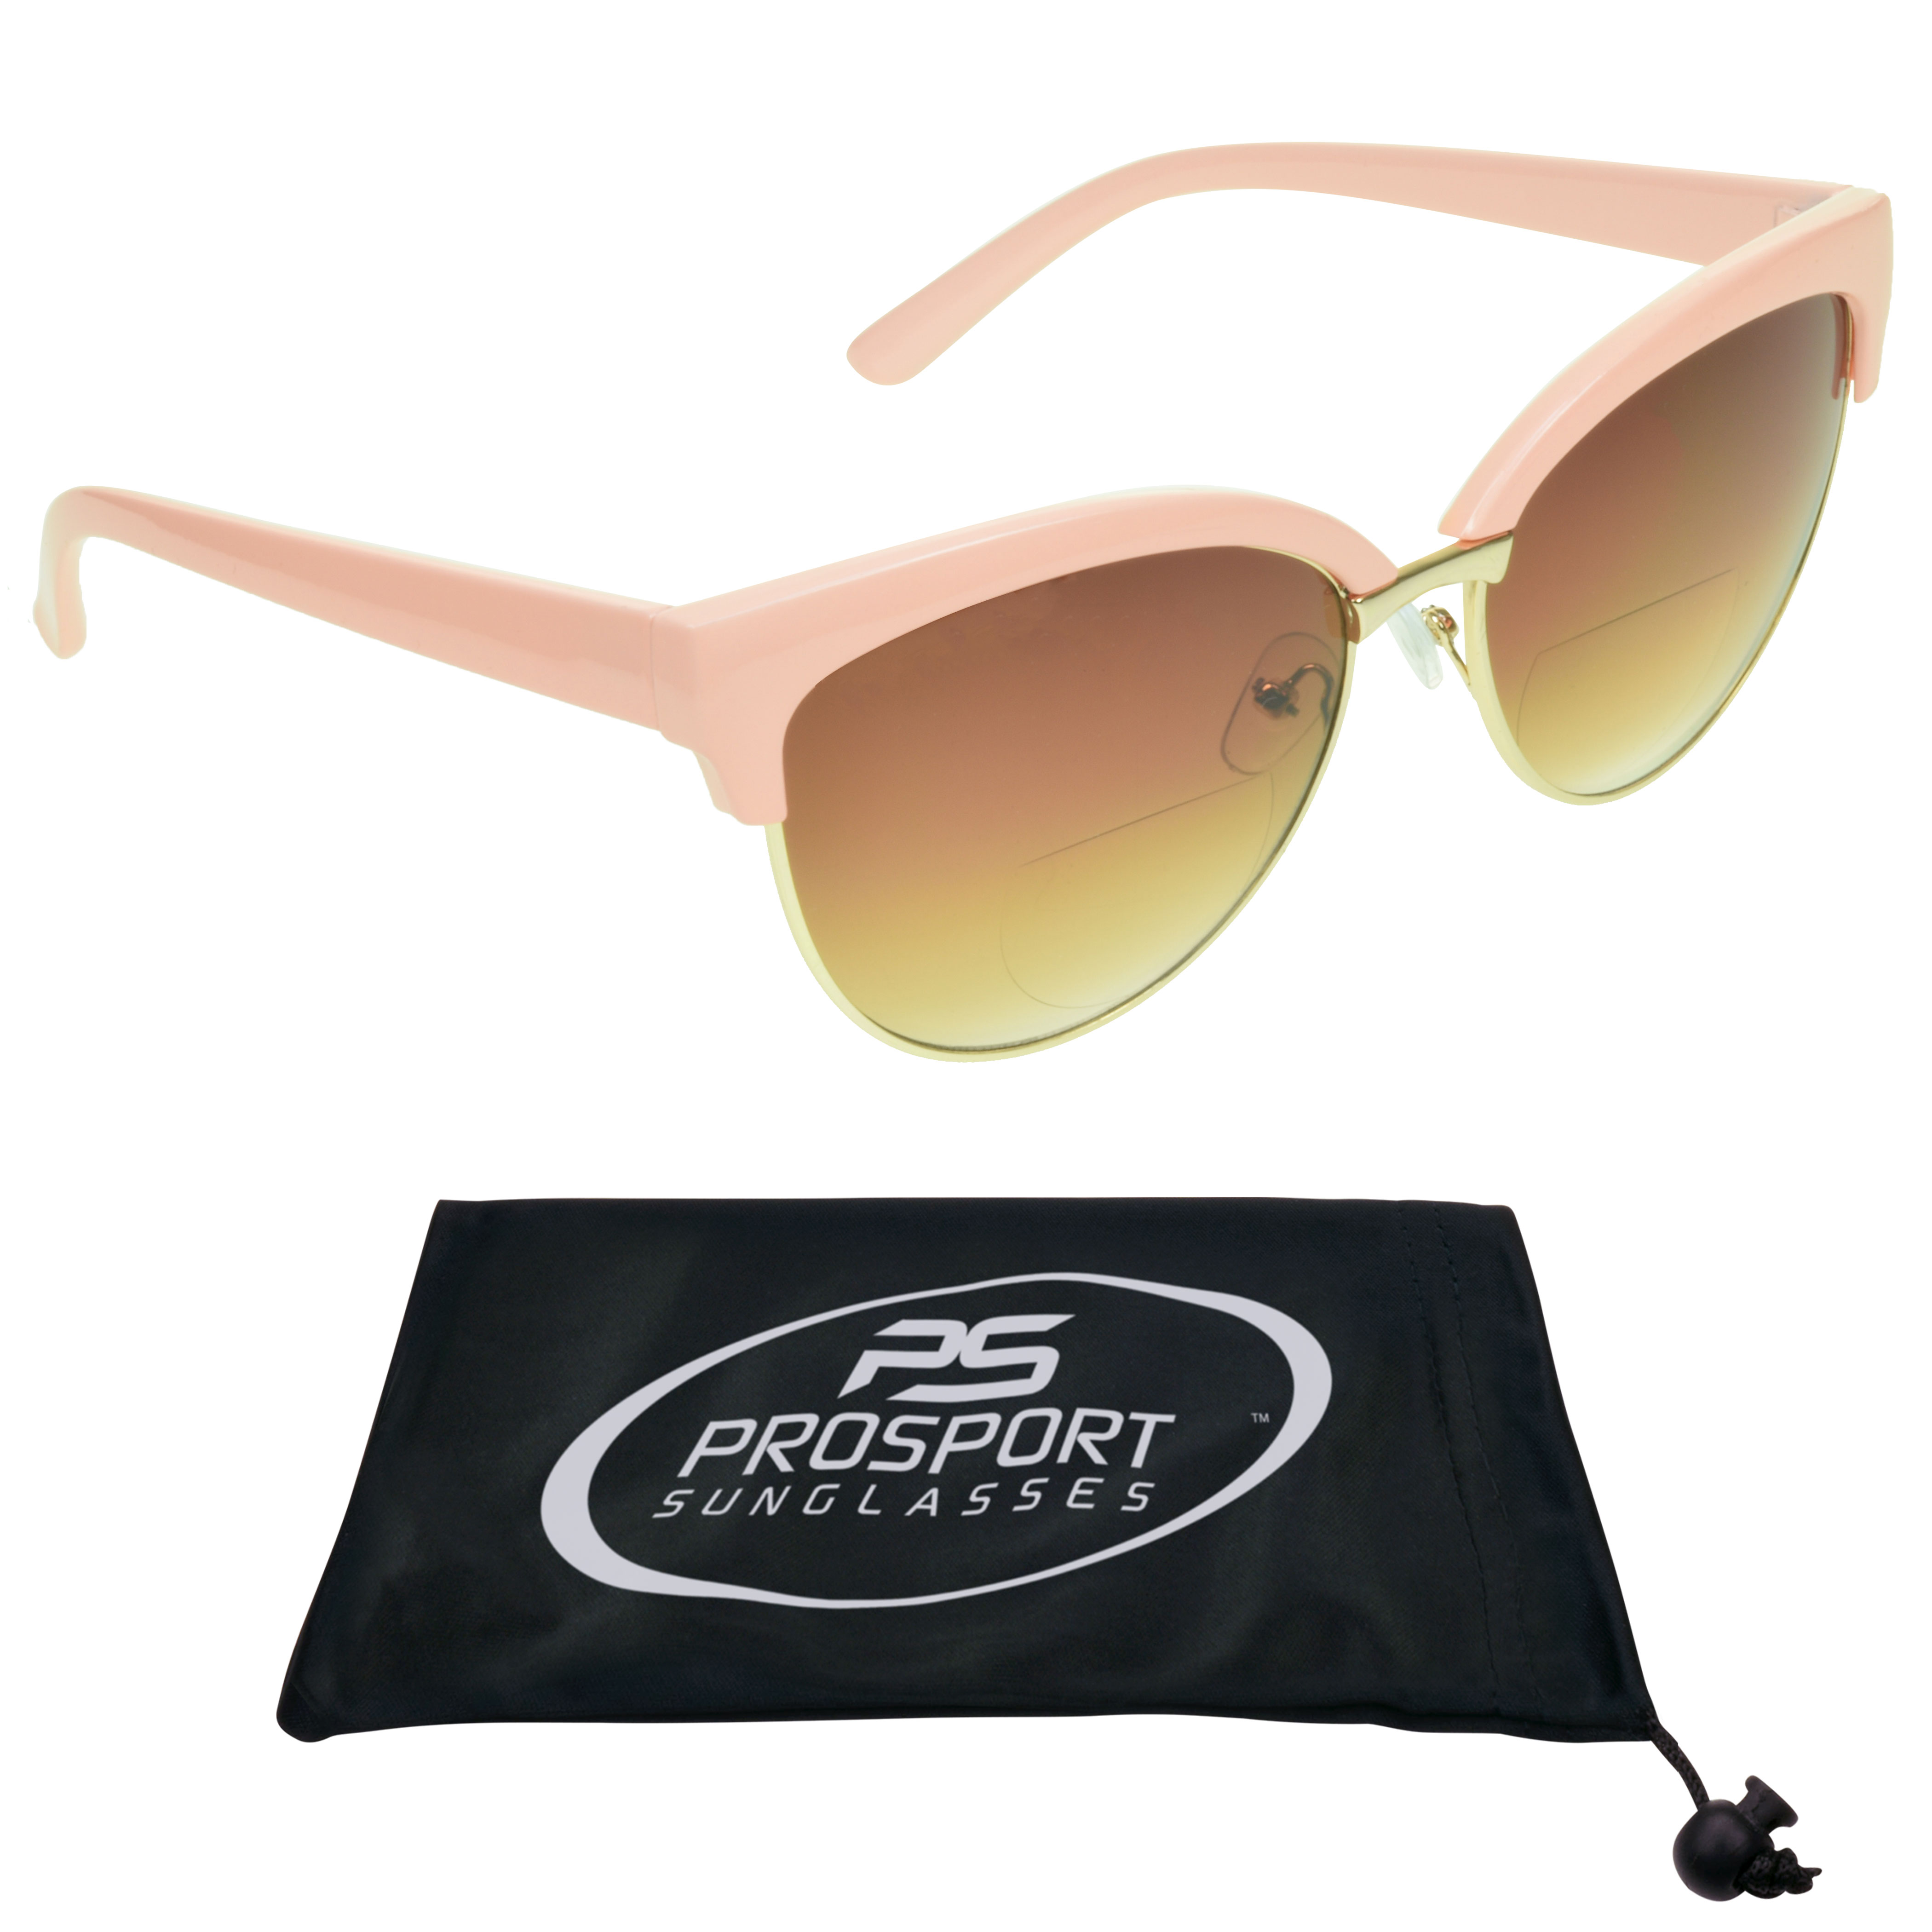 proSPORT Women Bifocal Reading Cateye Fashion Horn Rim Sunglasses Pink Gold Frame Brown Lens +1.50 - image 1 of 5